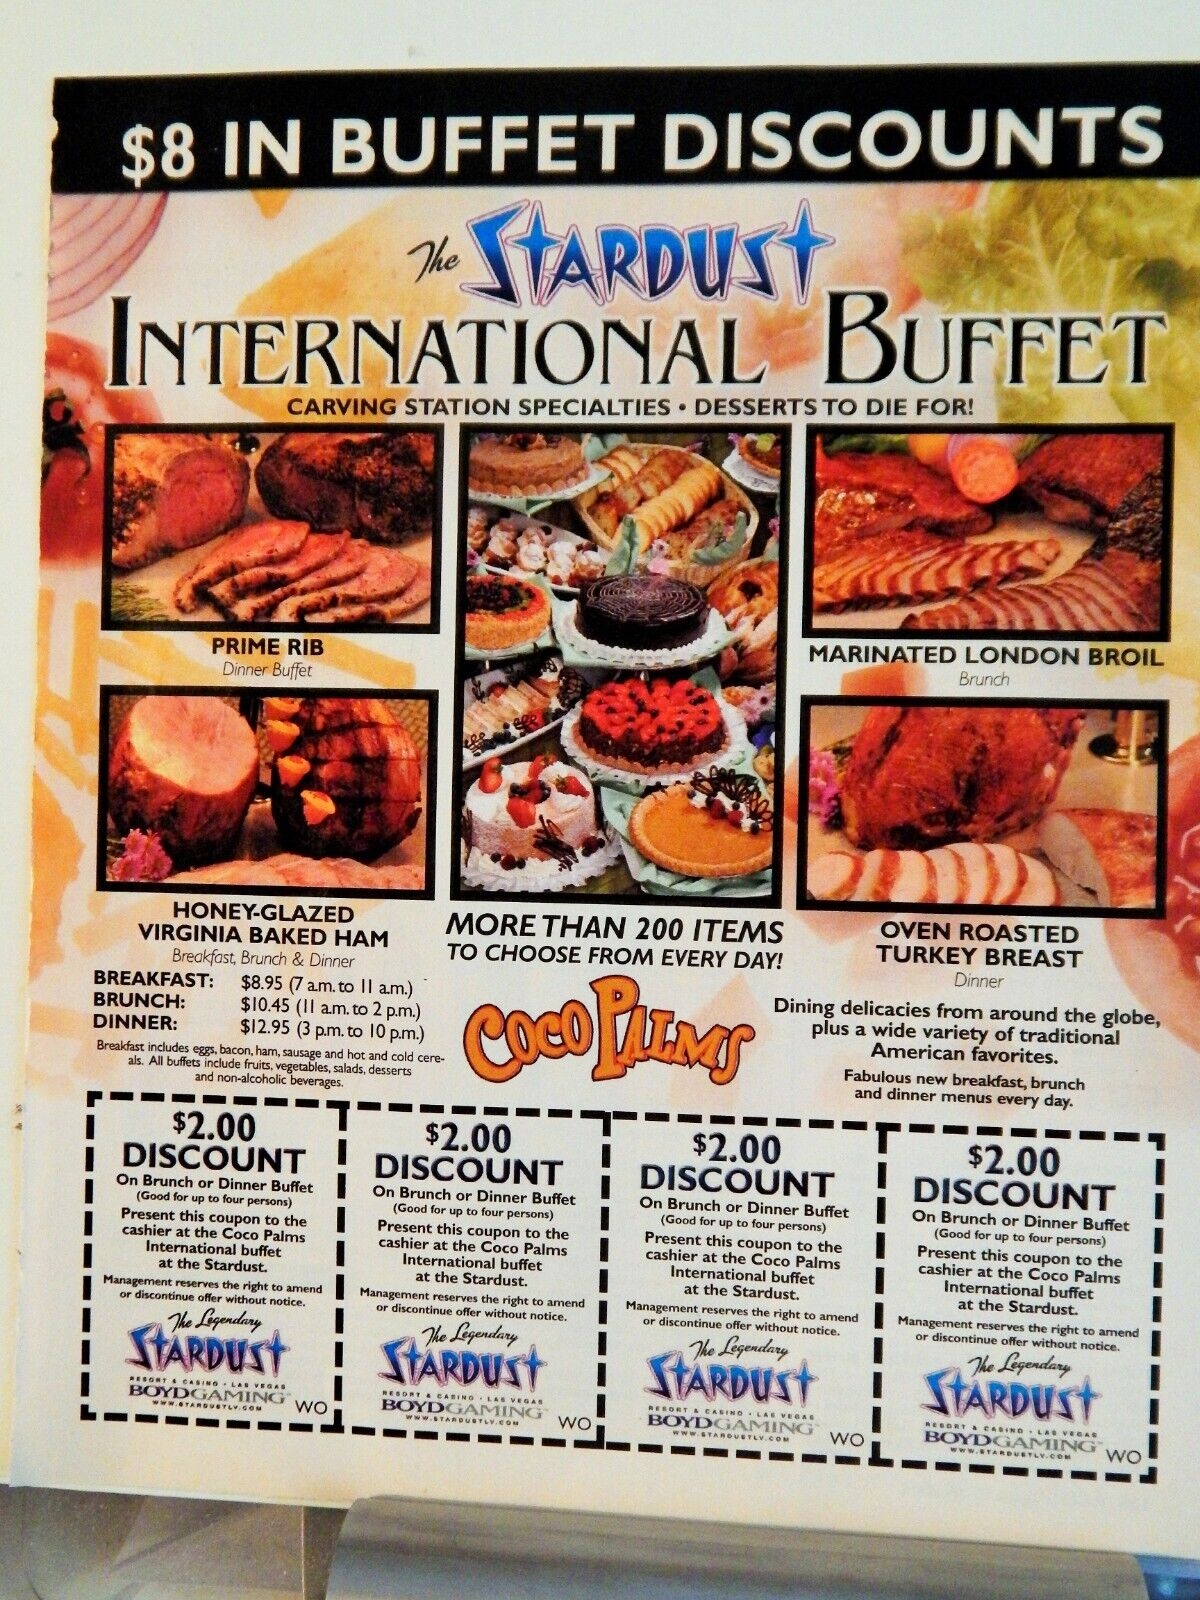 STARDUST INTERNATIONAL BUFFET STARDUST HOTEL LAS VEGAS VTG 2006 ADVERTISEMENT EBay - Free Las Vegas Buffet Coupons Printable